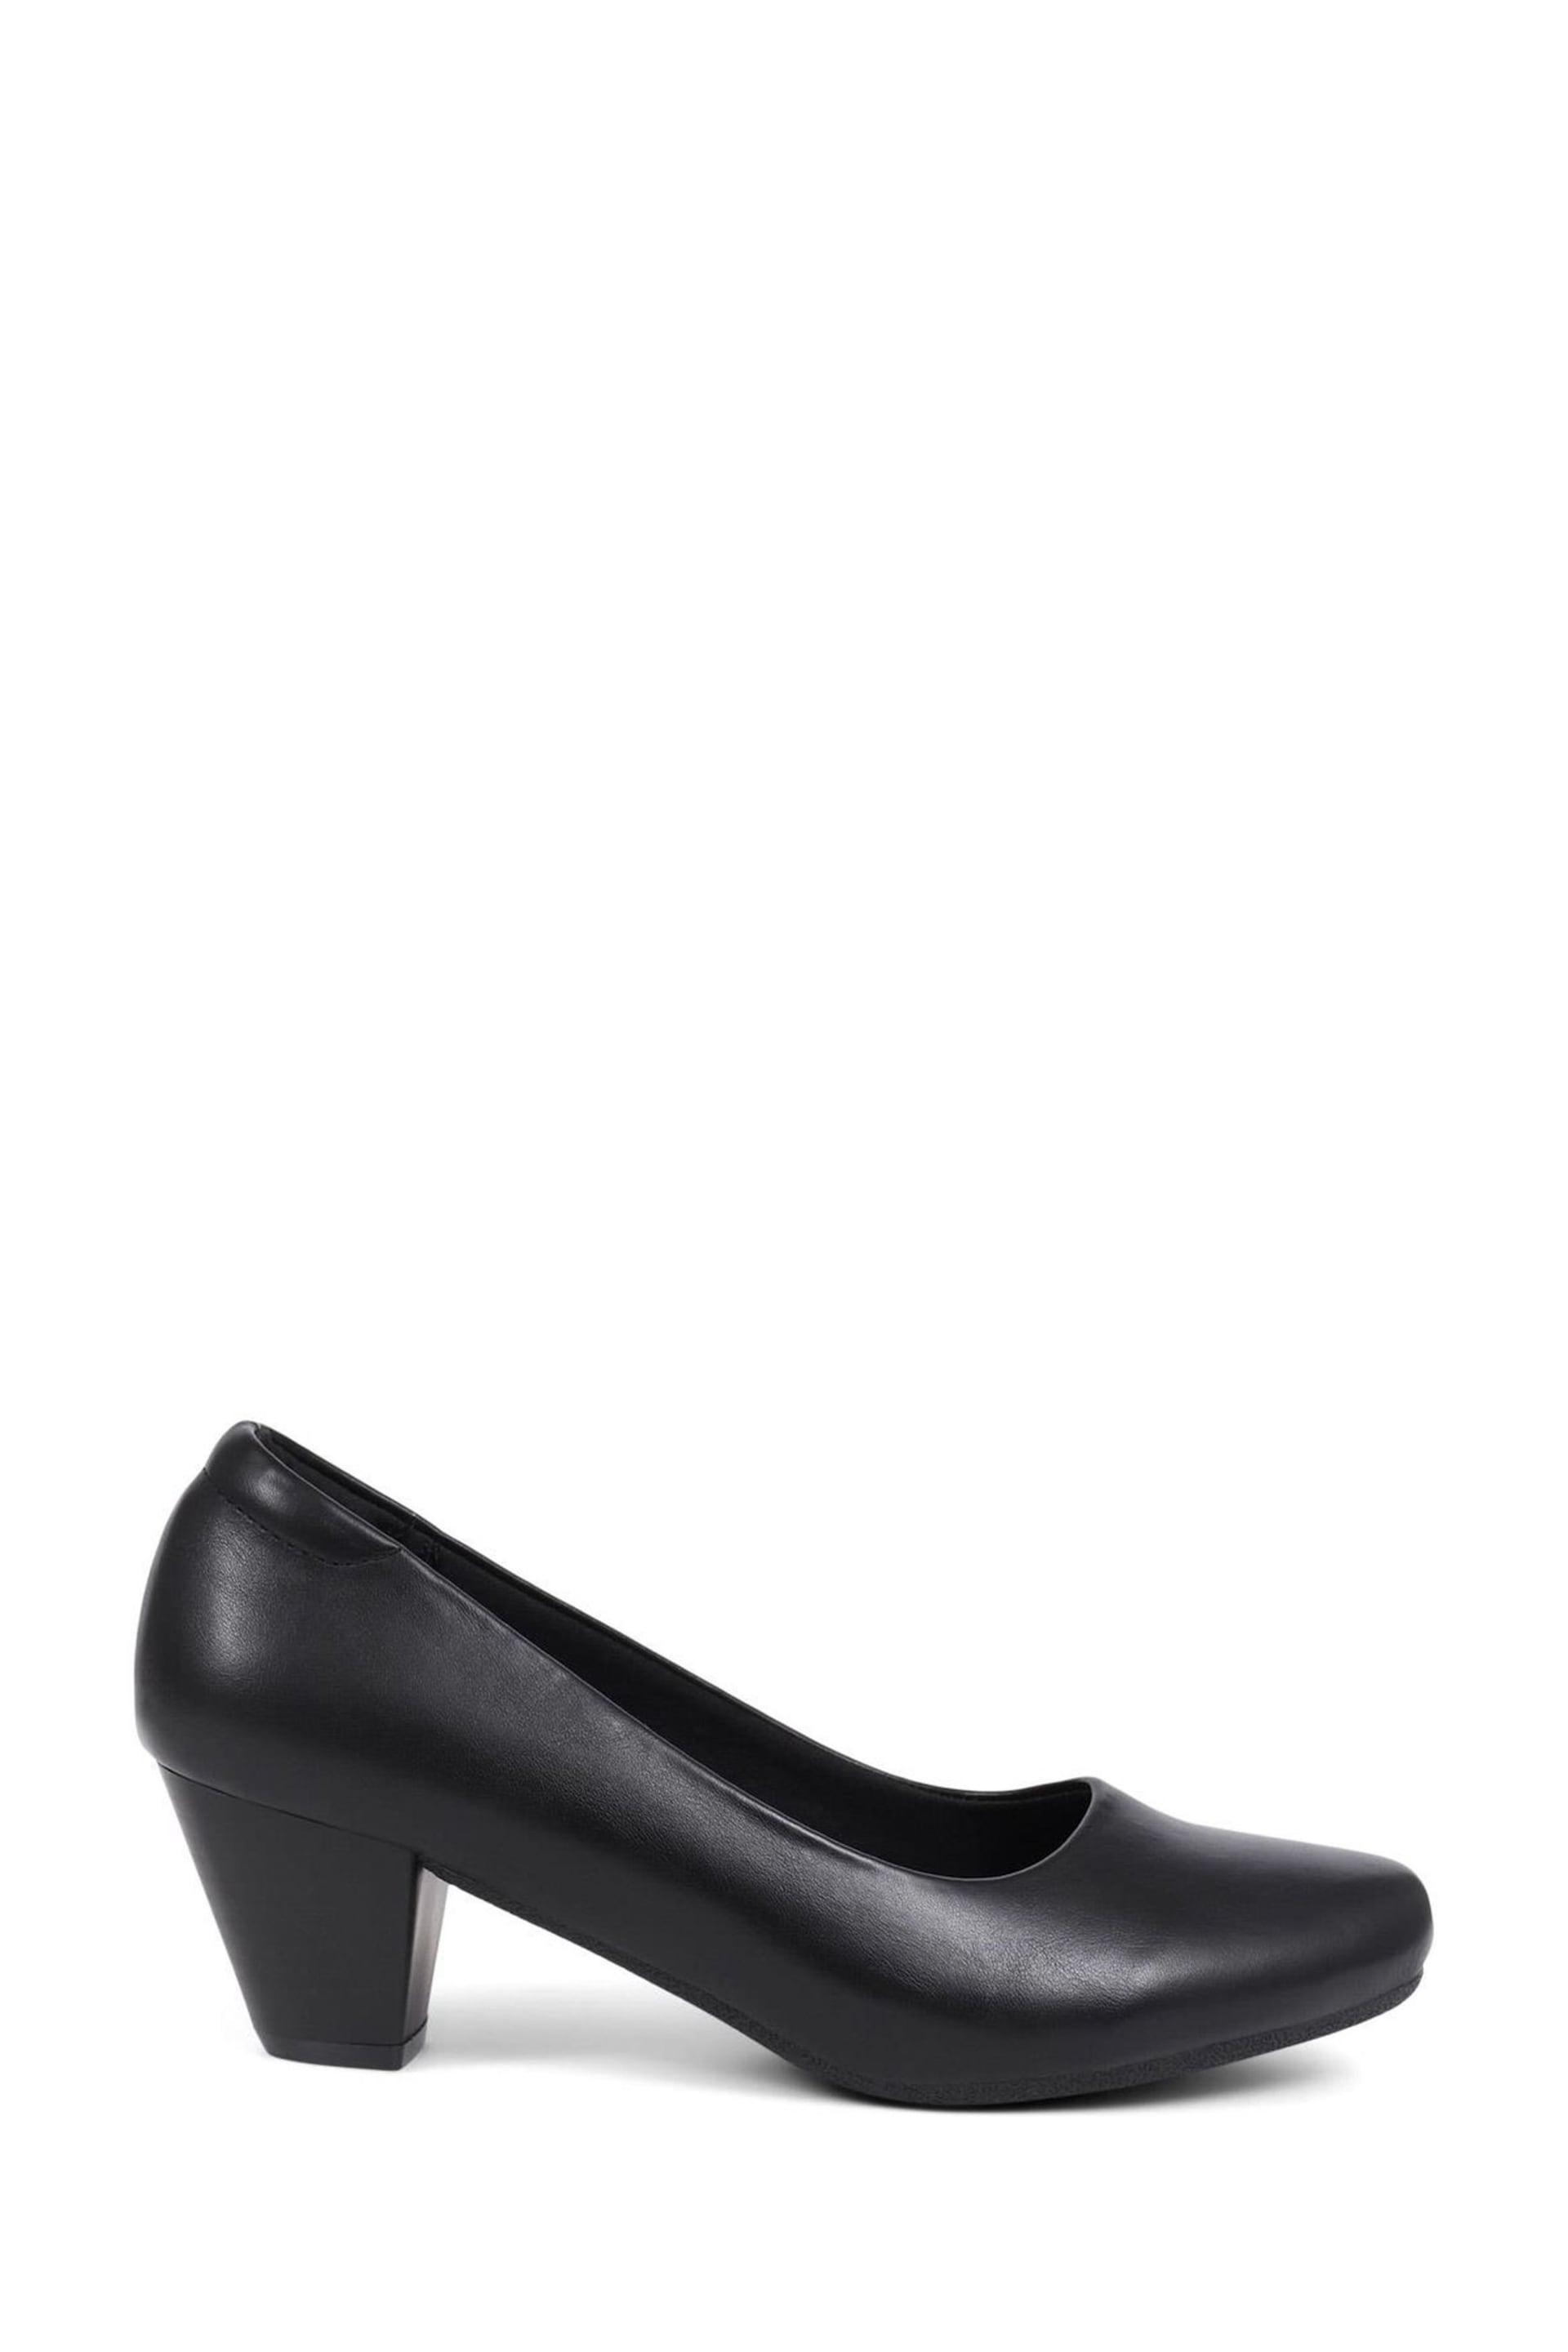 Pavers Heeled Court Black Shoes - Image 1 of 5